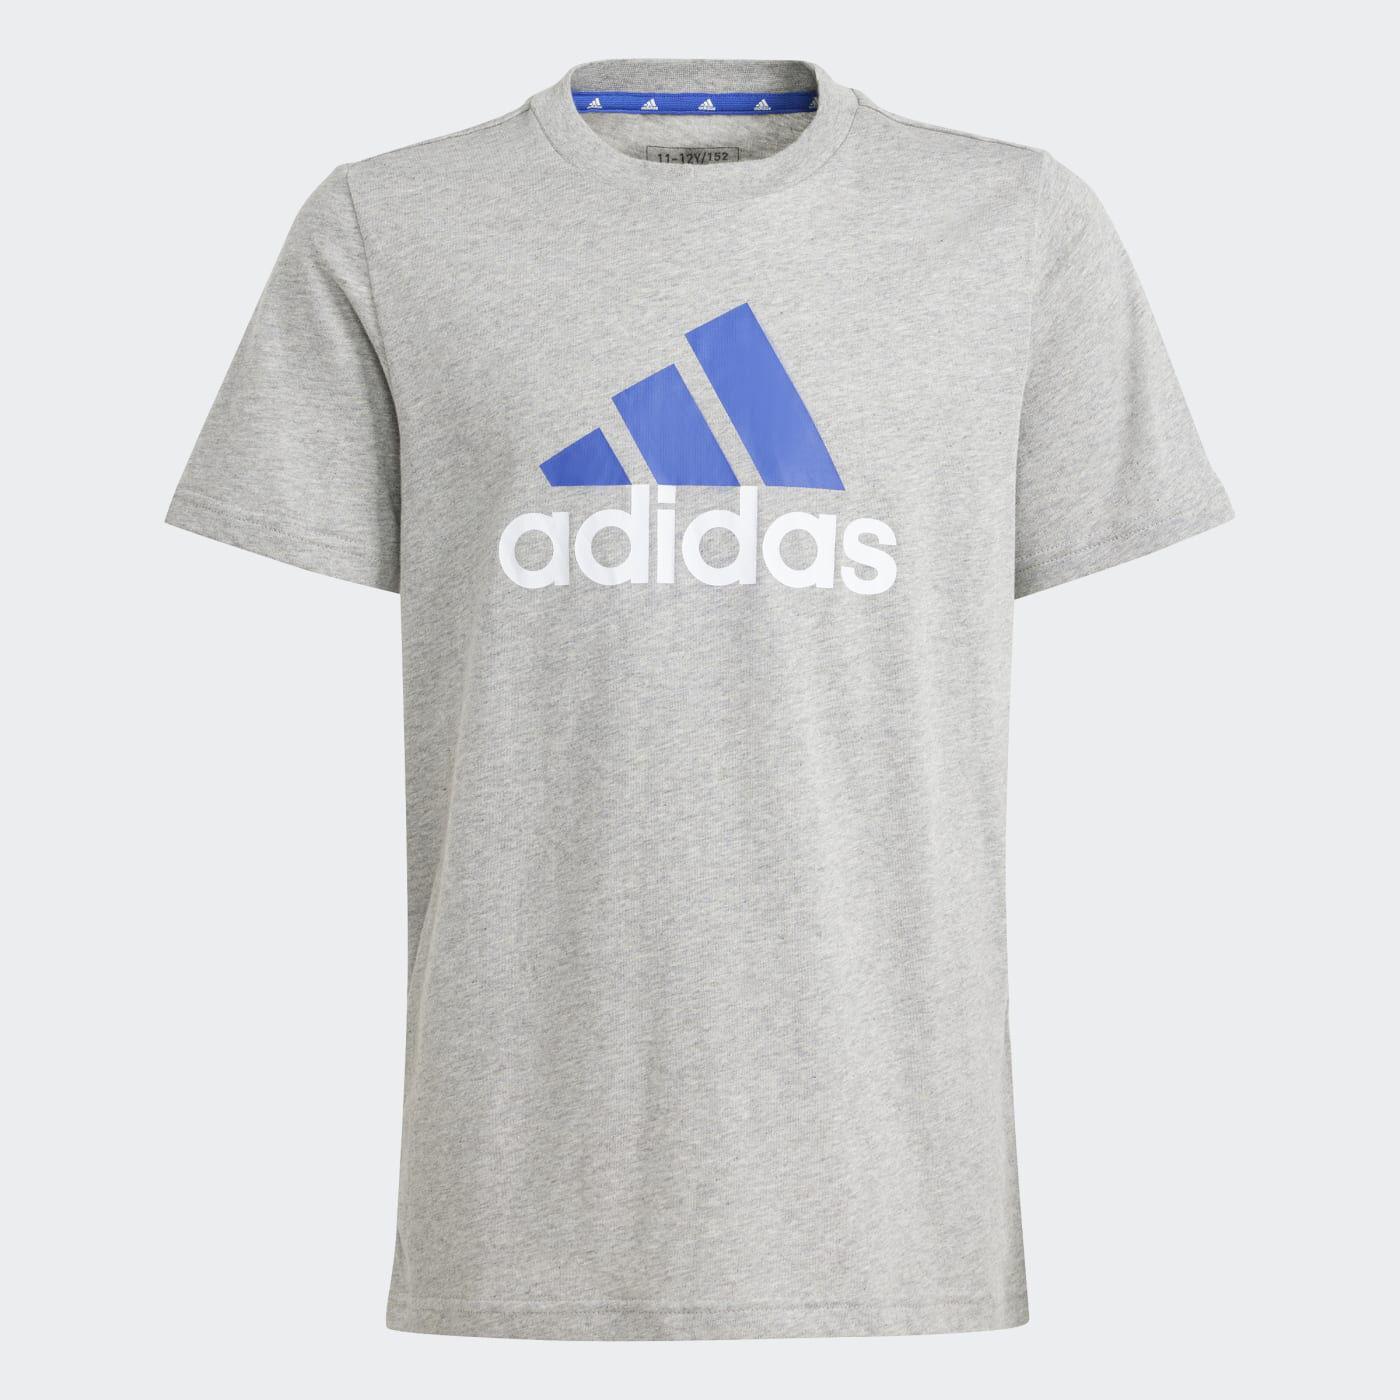 Camiseta Adidas Niño Algodón Big Logo Gris/Azul